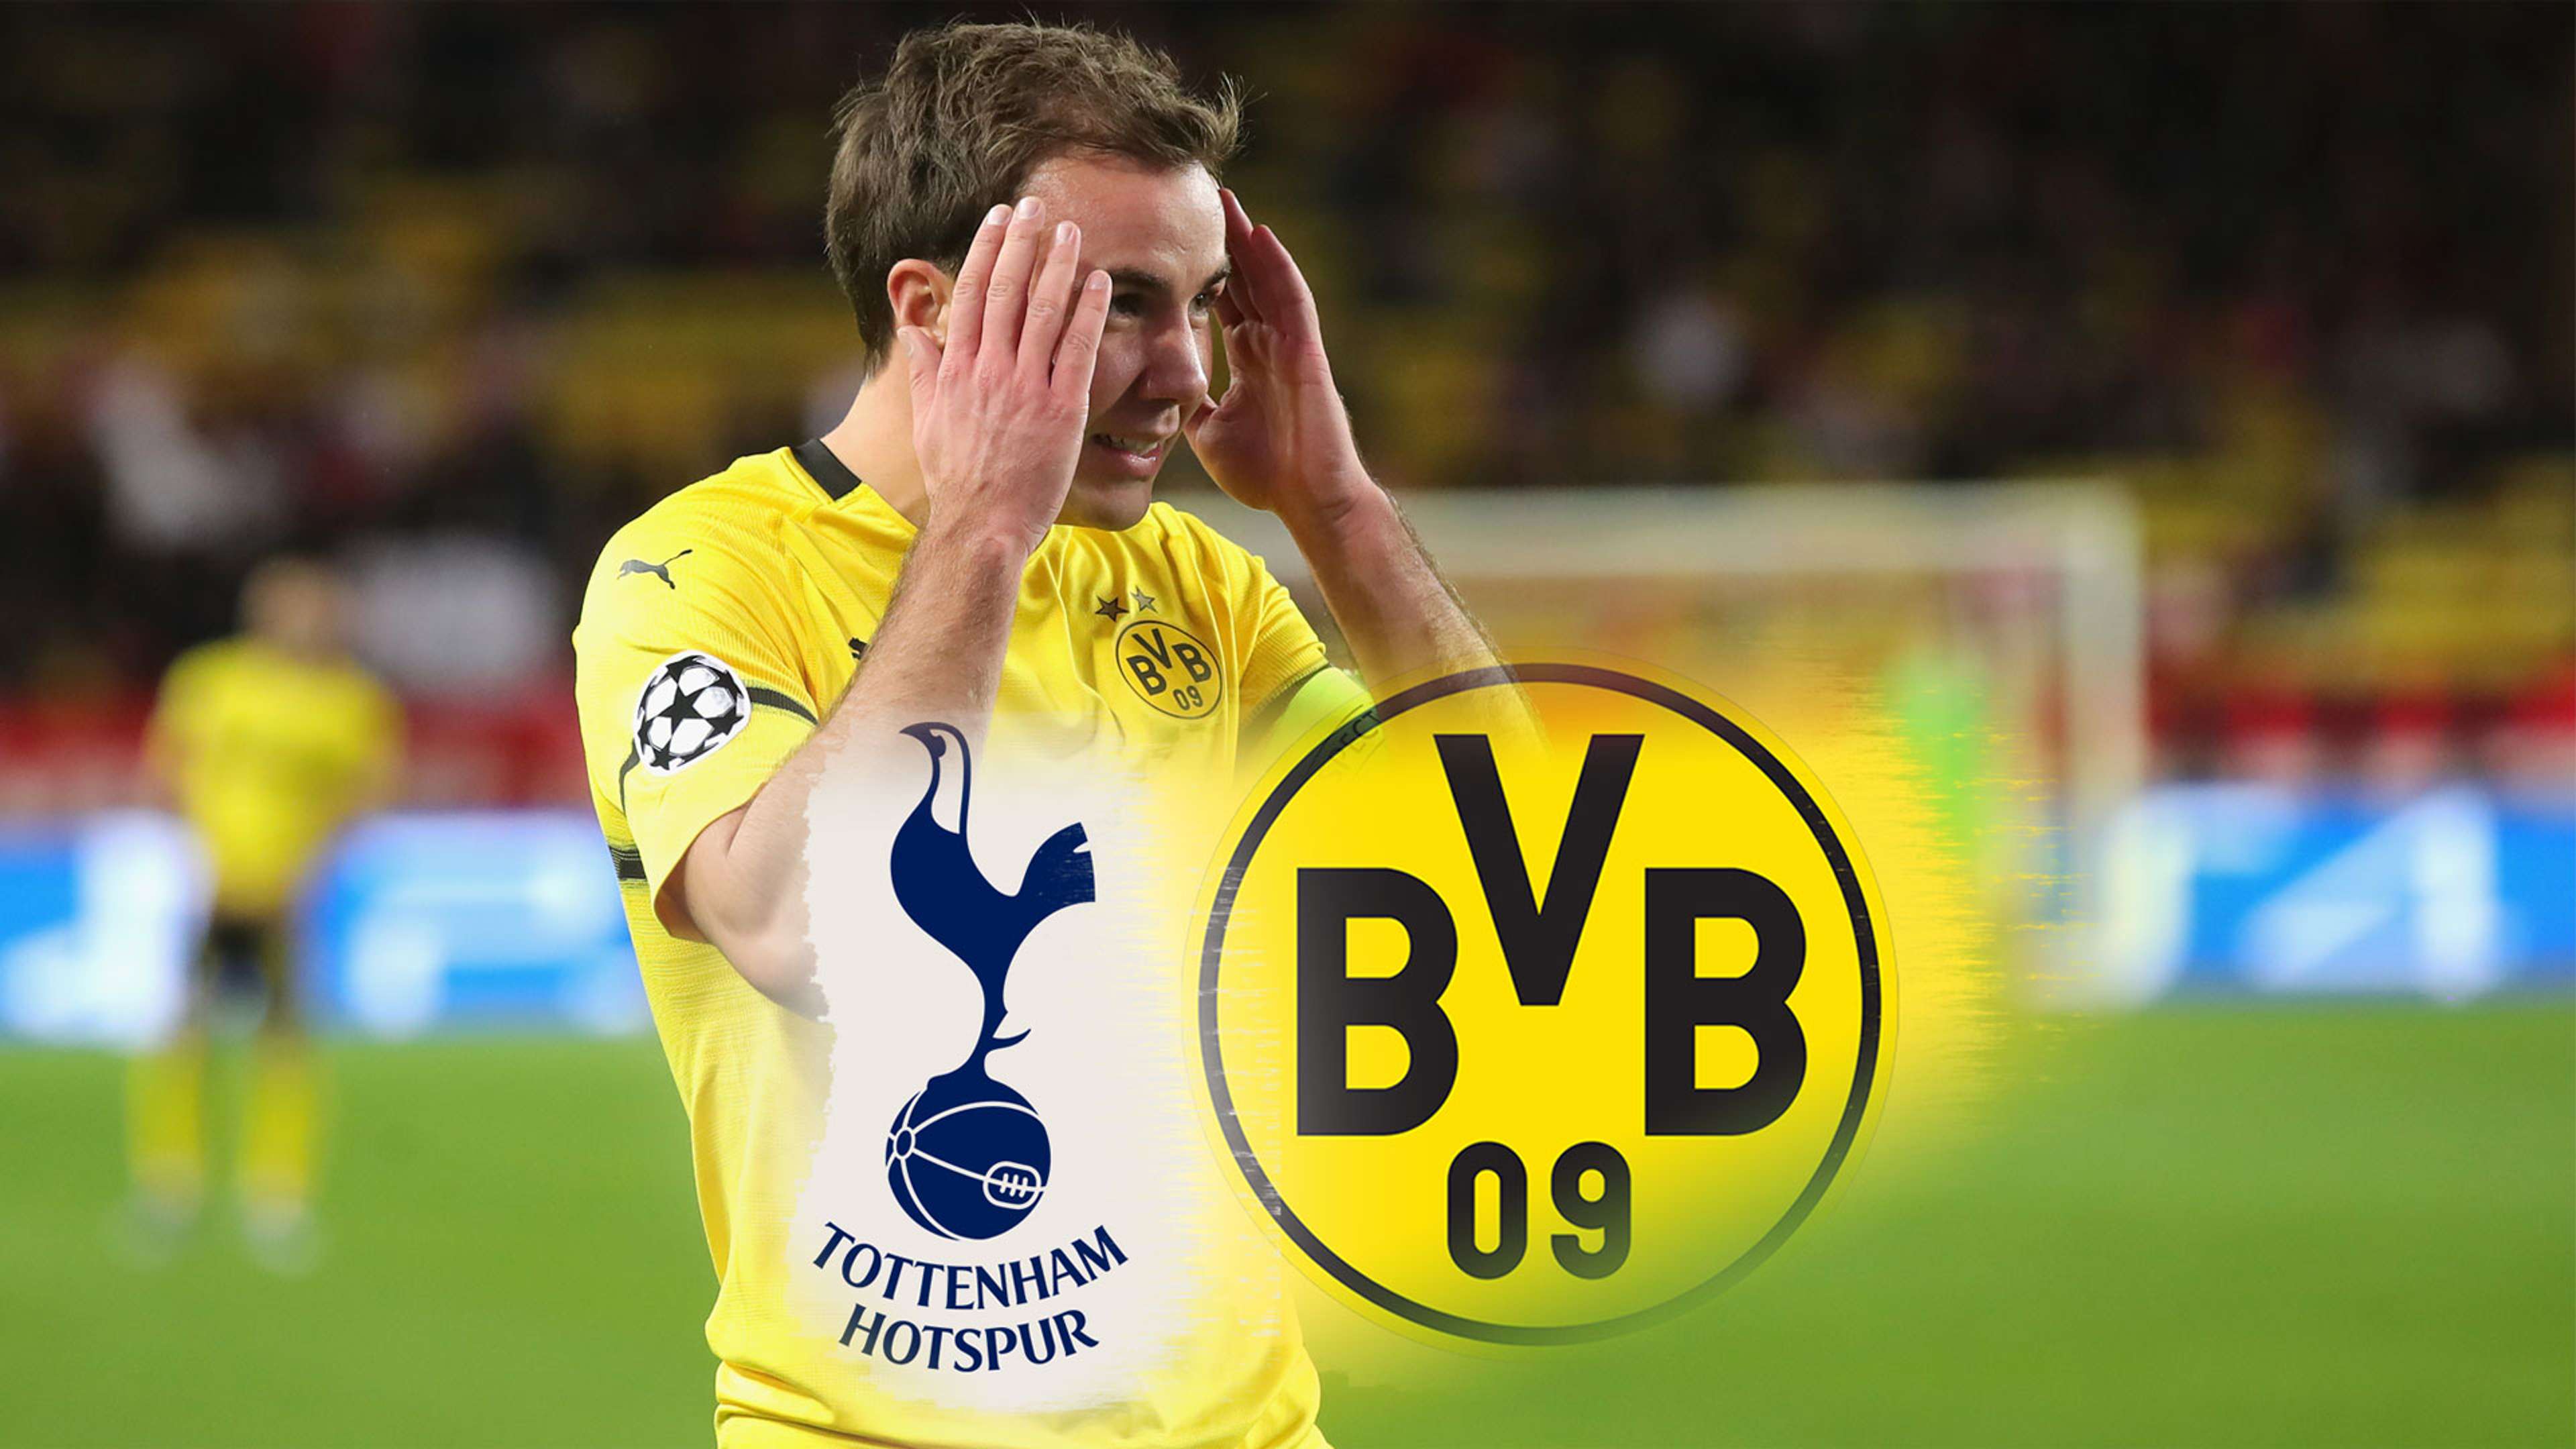 Totteham Hotspur Borussia Dortmund BVB TV LIVESTREAM Champions League